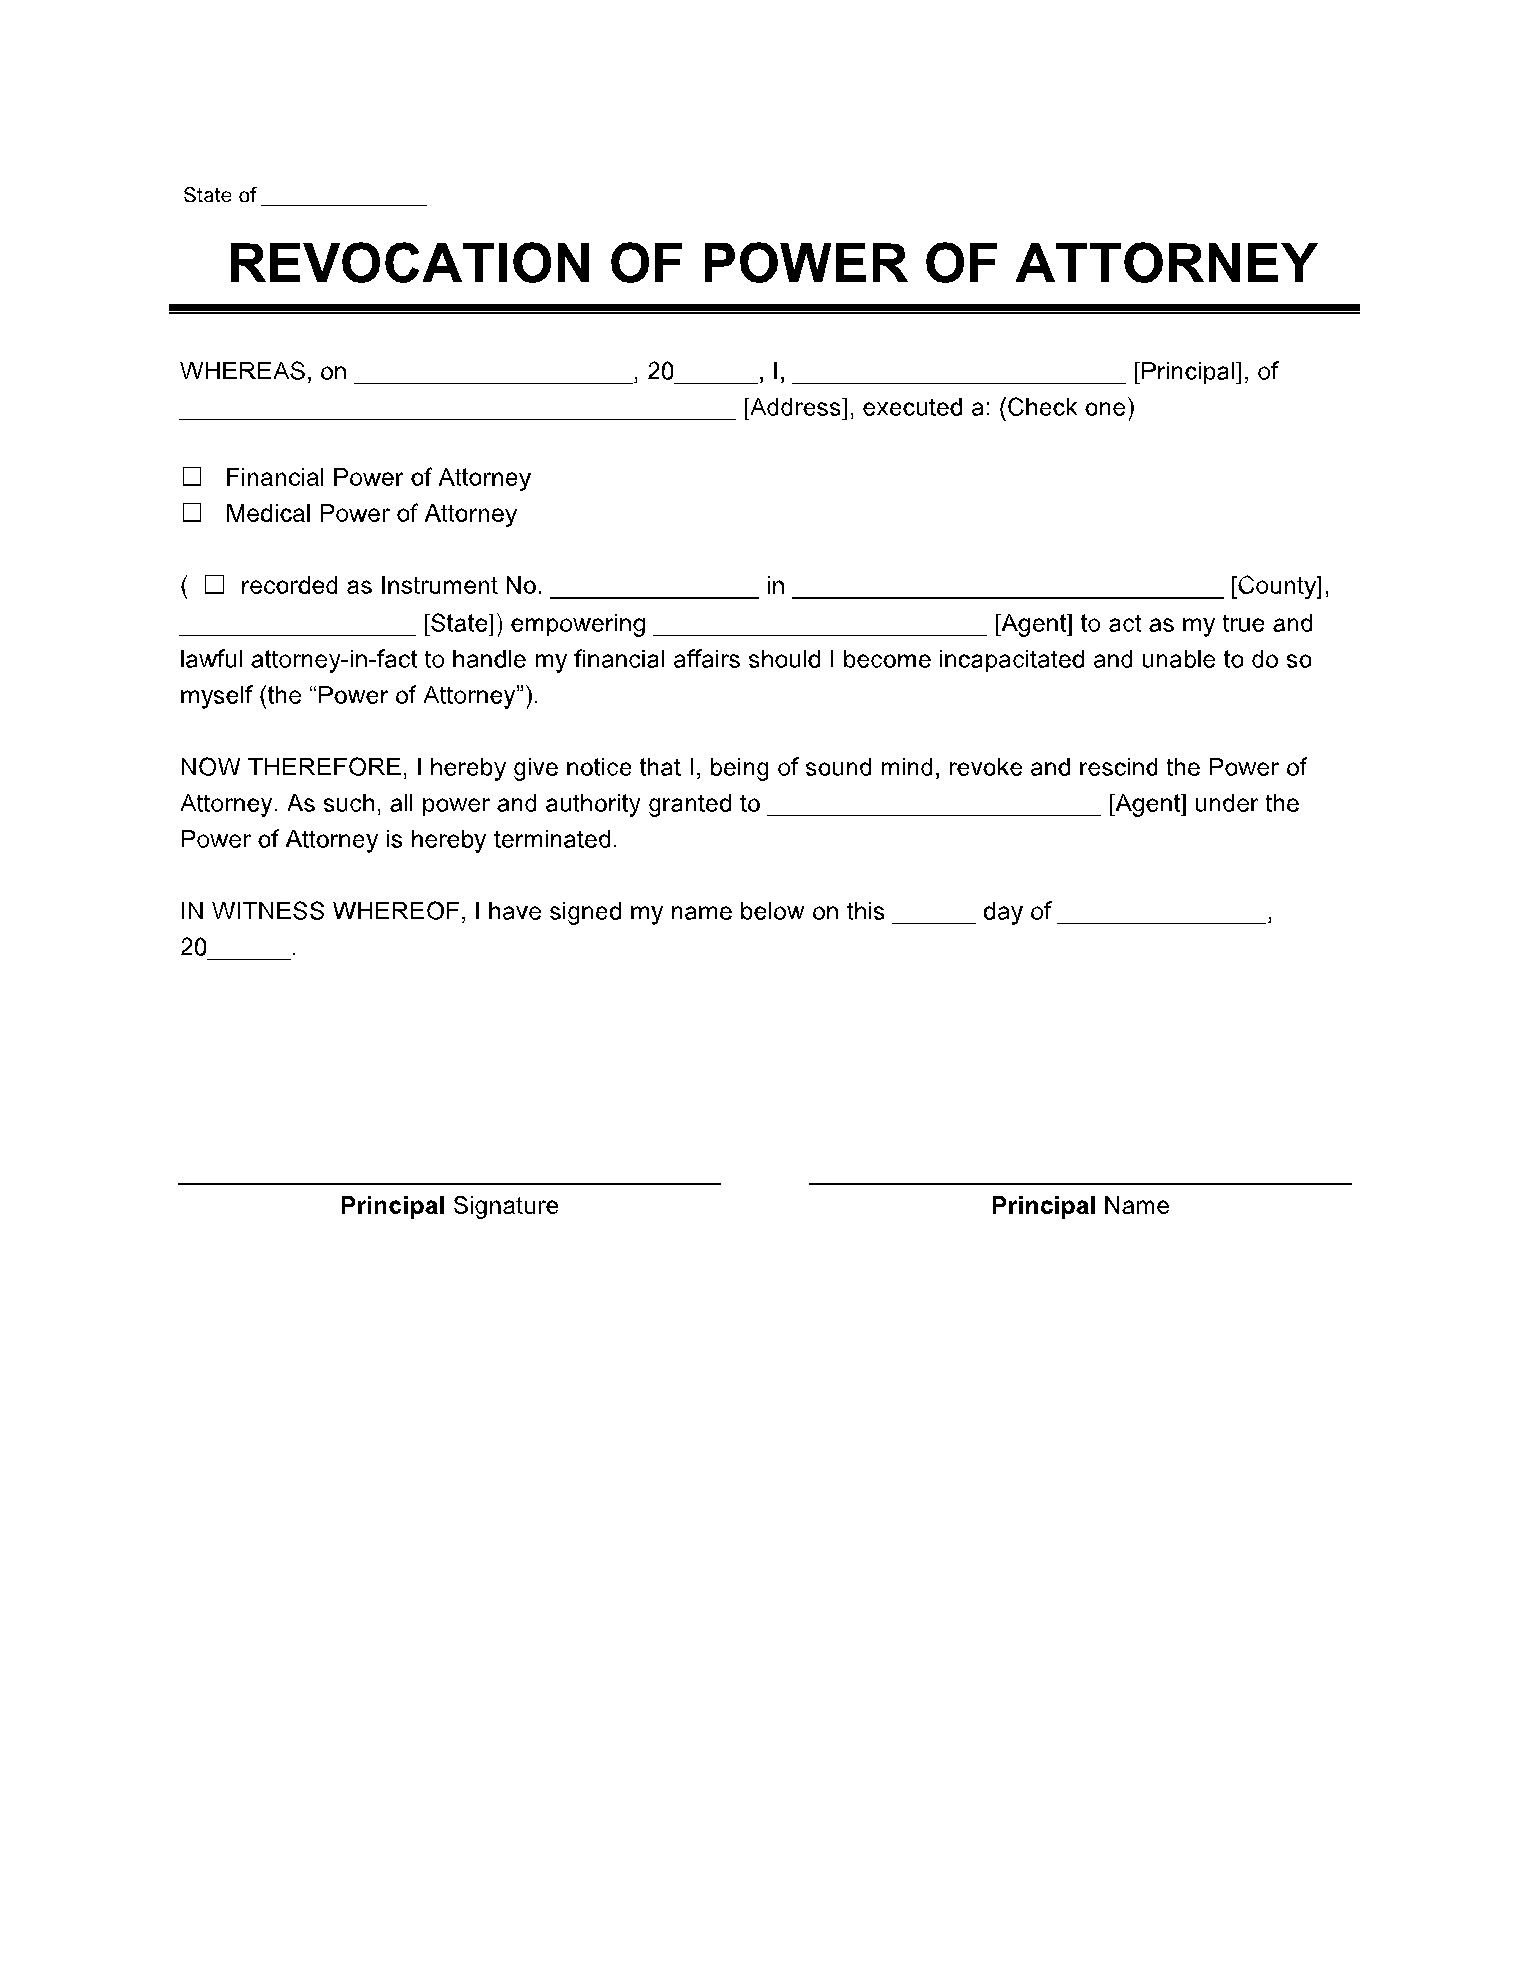 Power of Attorney Revocation Form